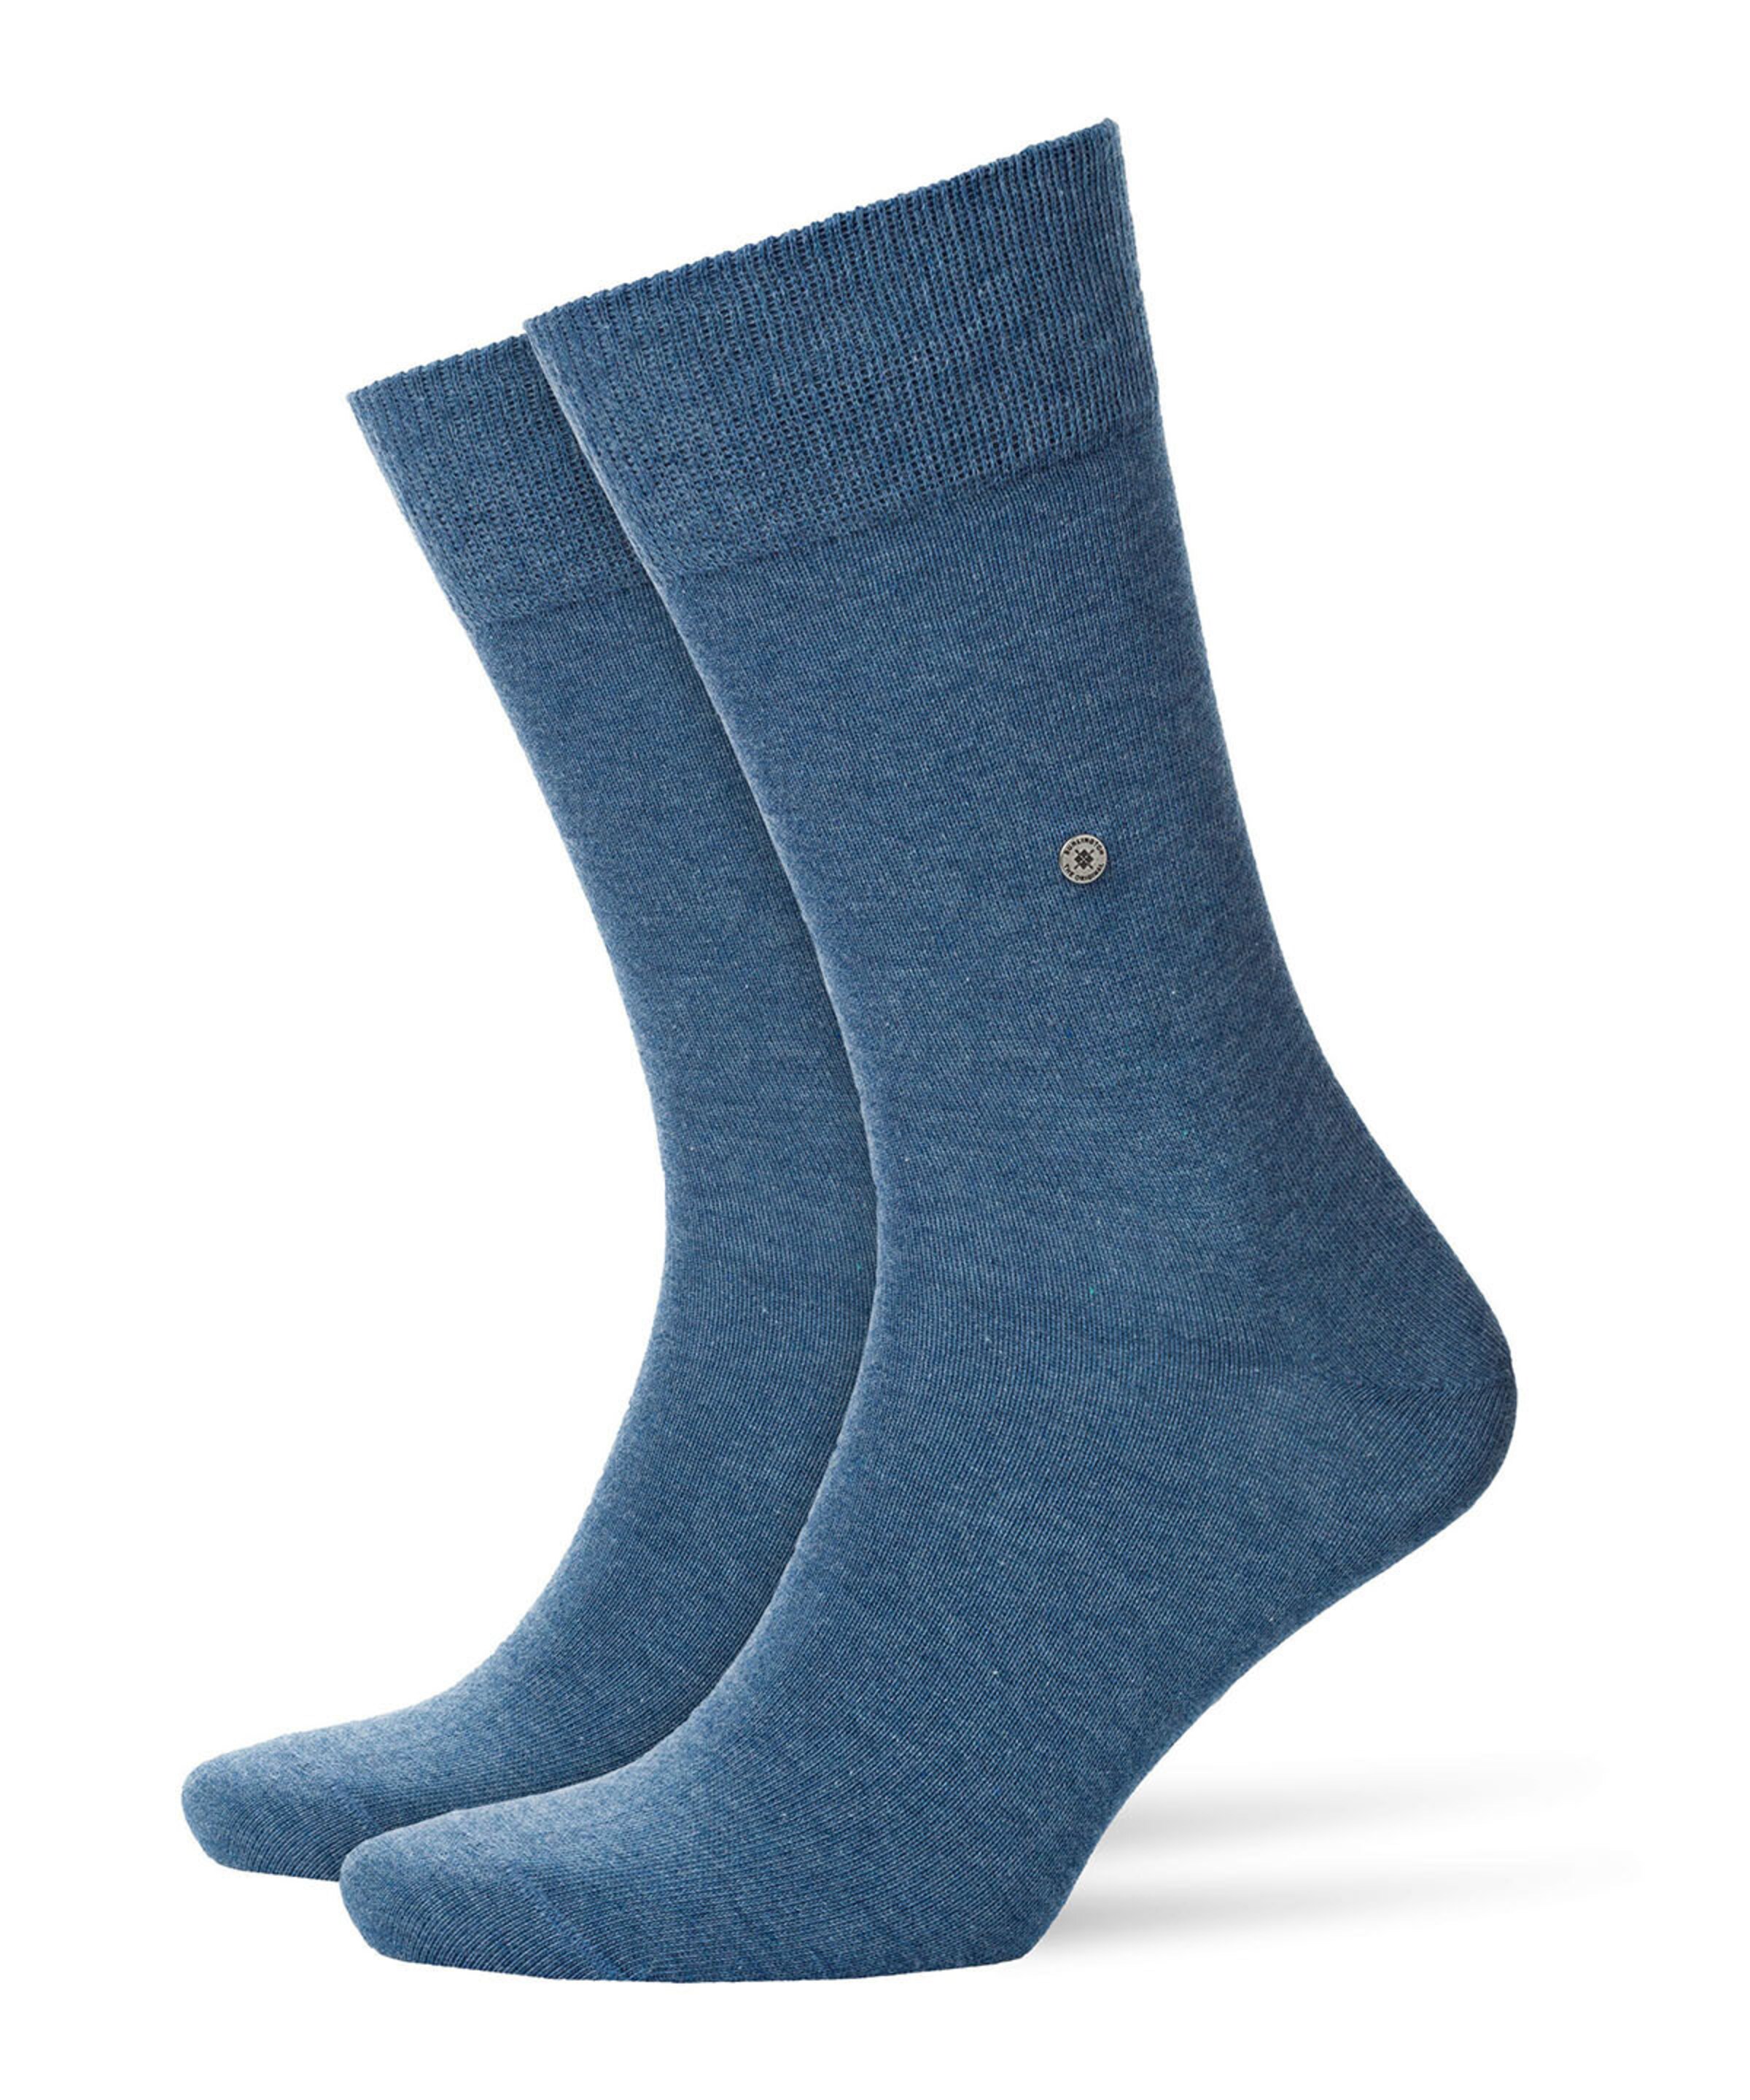 Männer Wäsche BURLINGTON Socken in Blau - JF81830